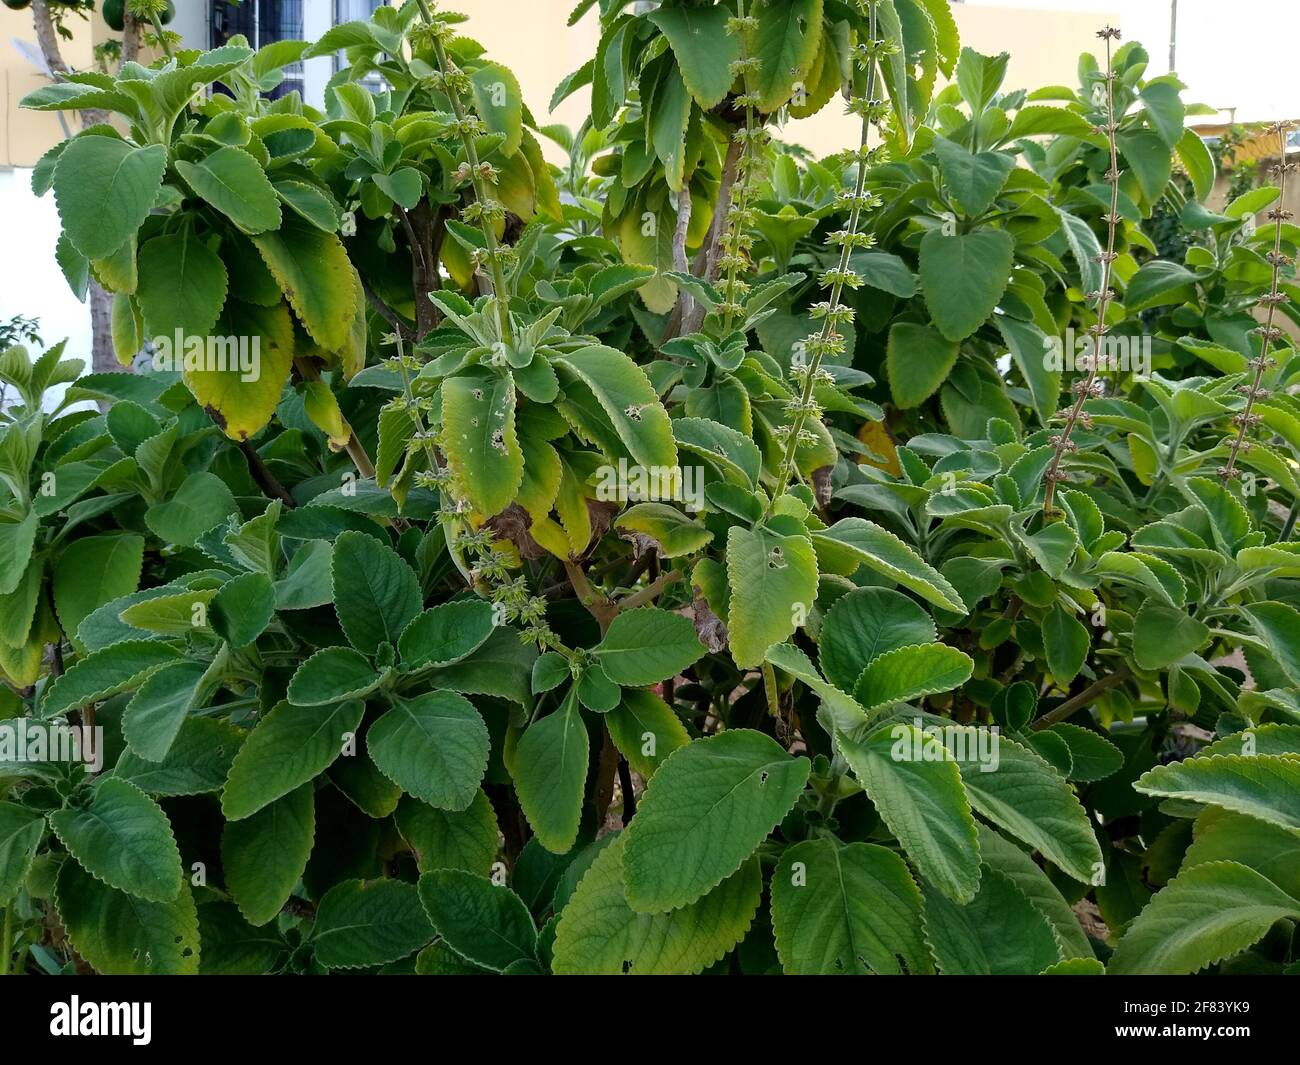 salvador, bahia, brazil - november 26, 2020: plectranthus barbatus plant, known by the taxonomic synonym or garden boldo, seen in the city of Salvador Stock Photo